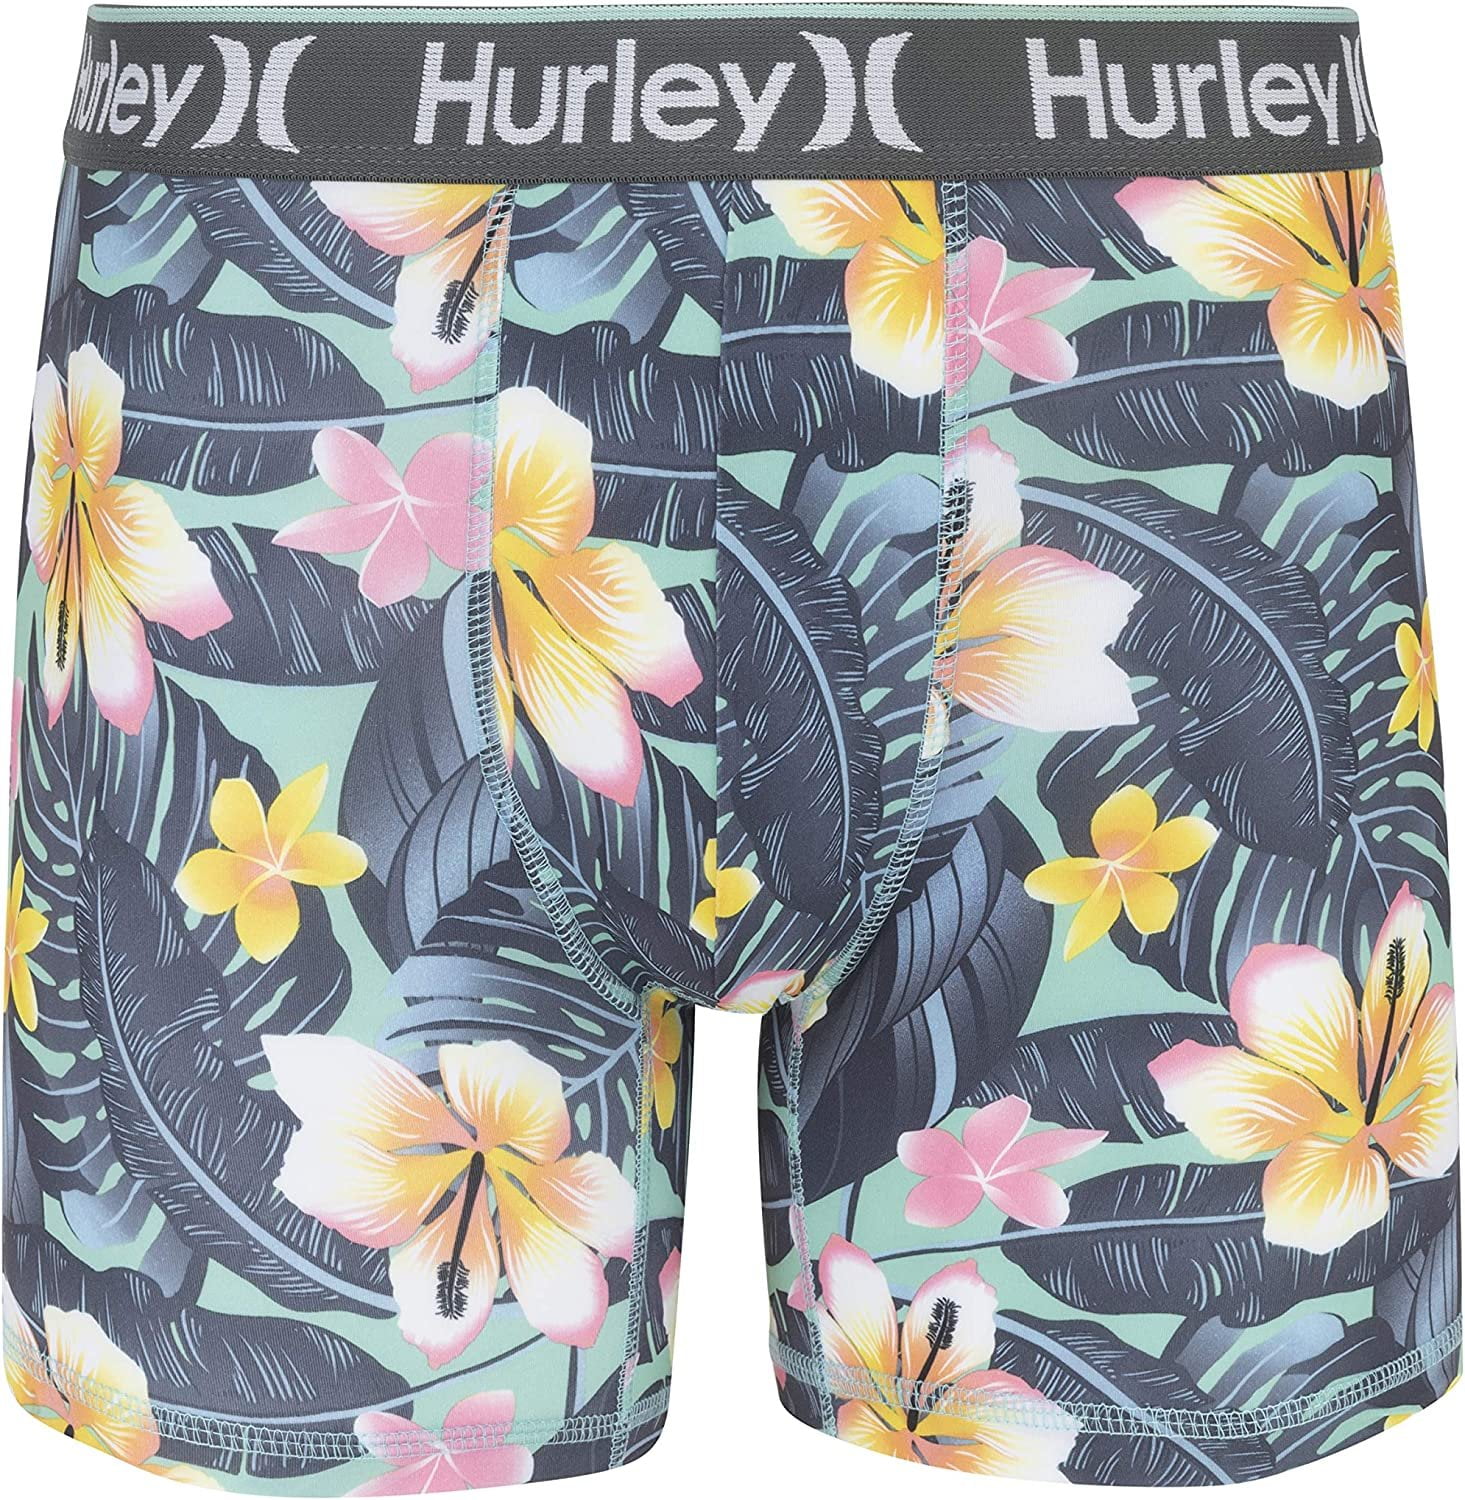 3 Pack Men's Hurley Regrind Boxer Briefs Underwear Men’s Small,Medium Or  Large